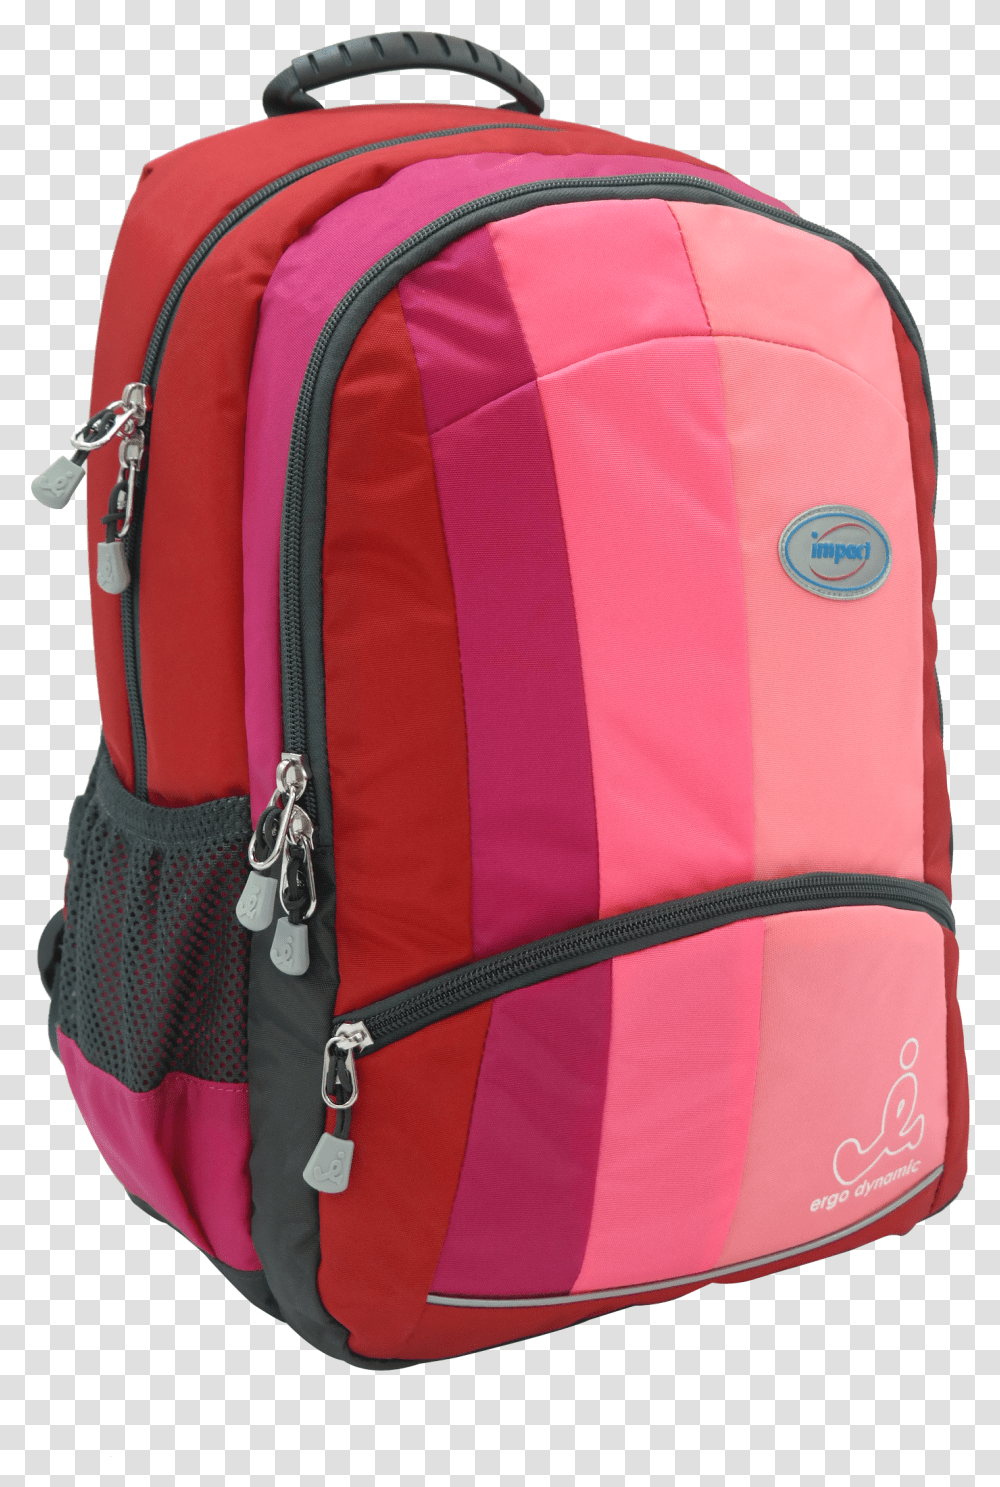 Impact Ergonomic Backpack Ipeg 130 Pink School Bags, Luggage, Suitcase Transparent Png